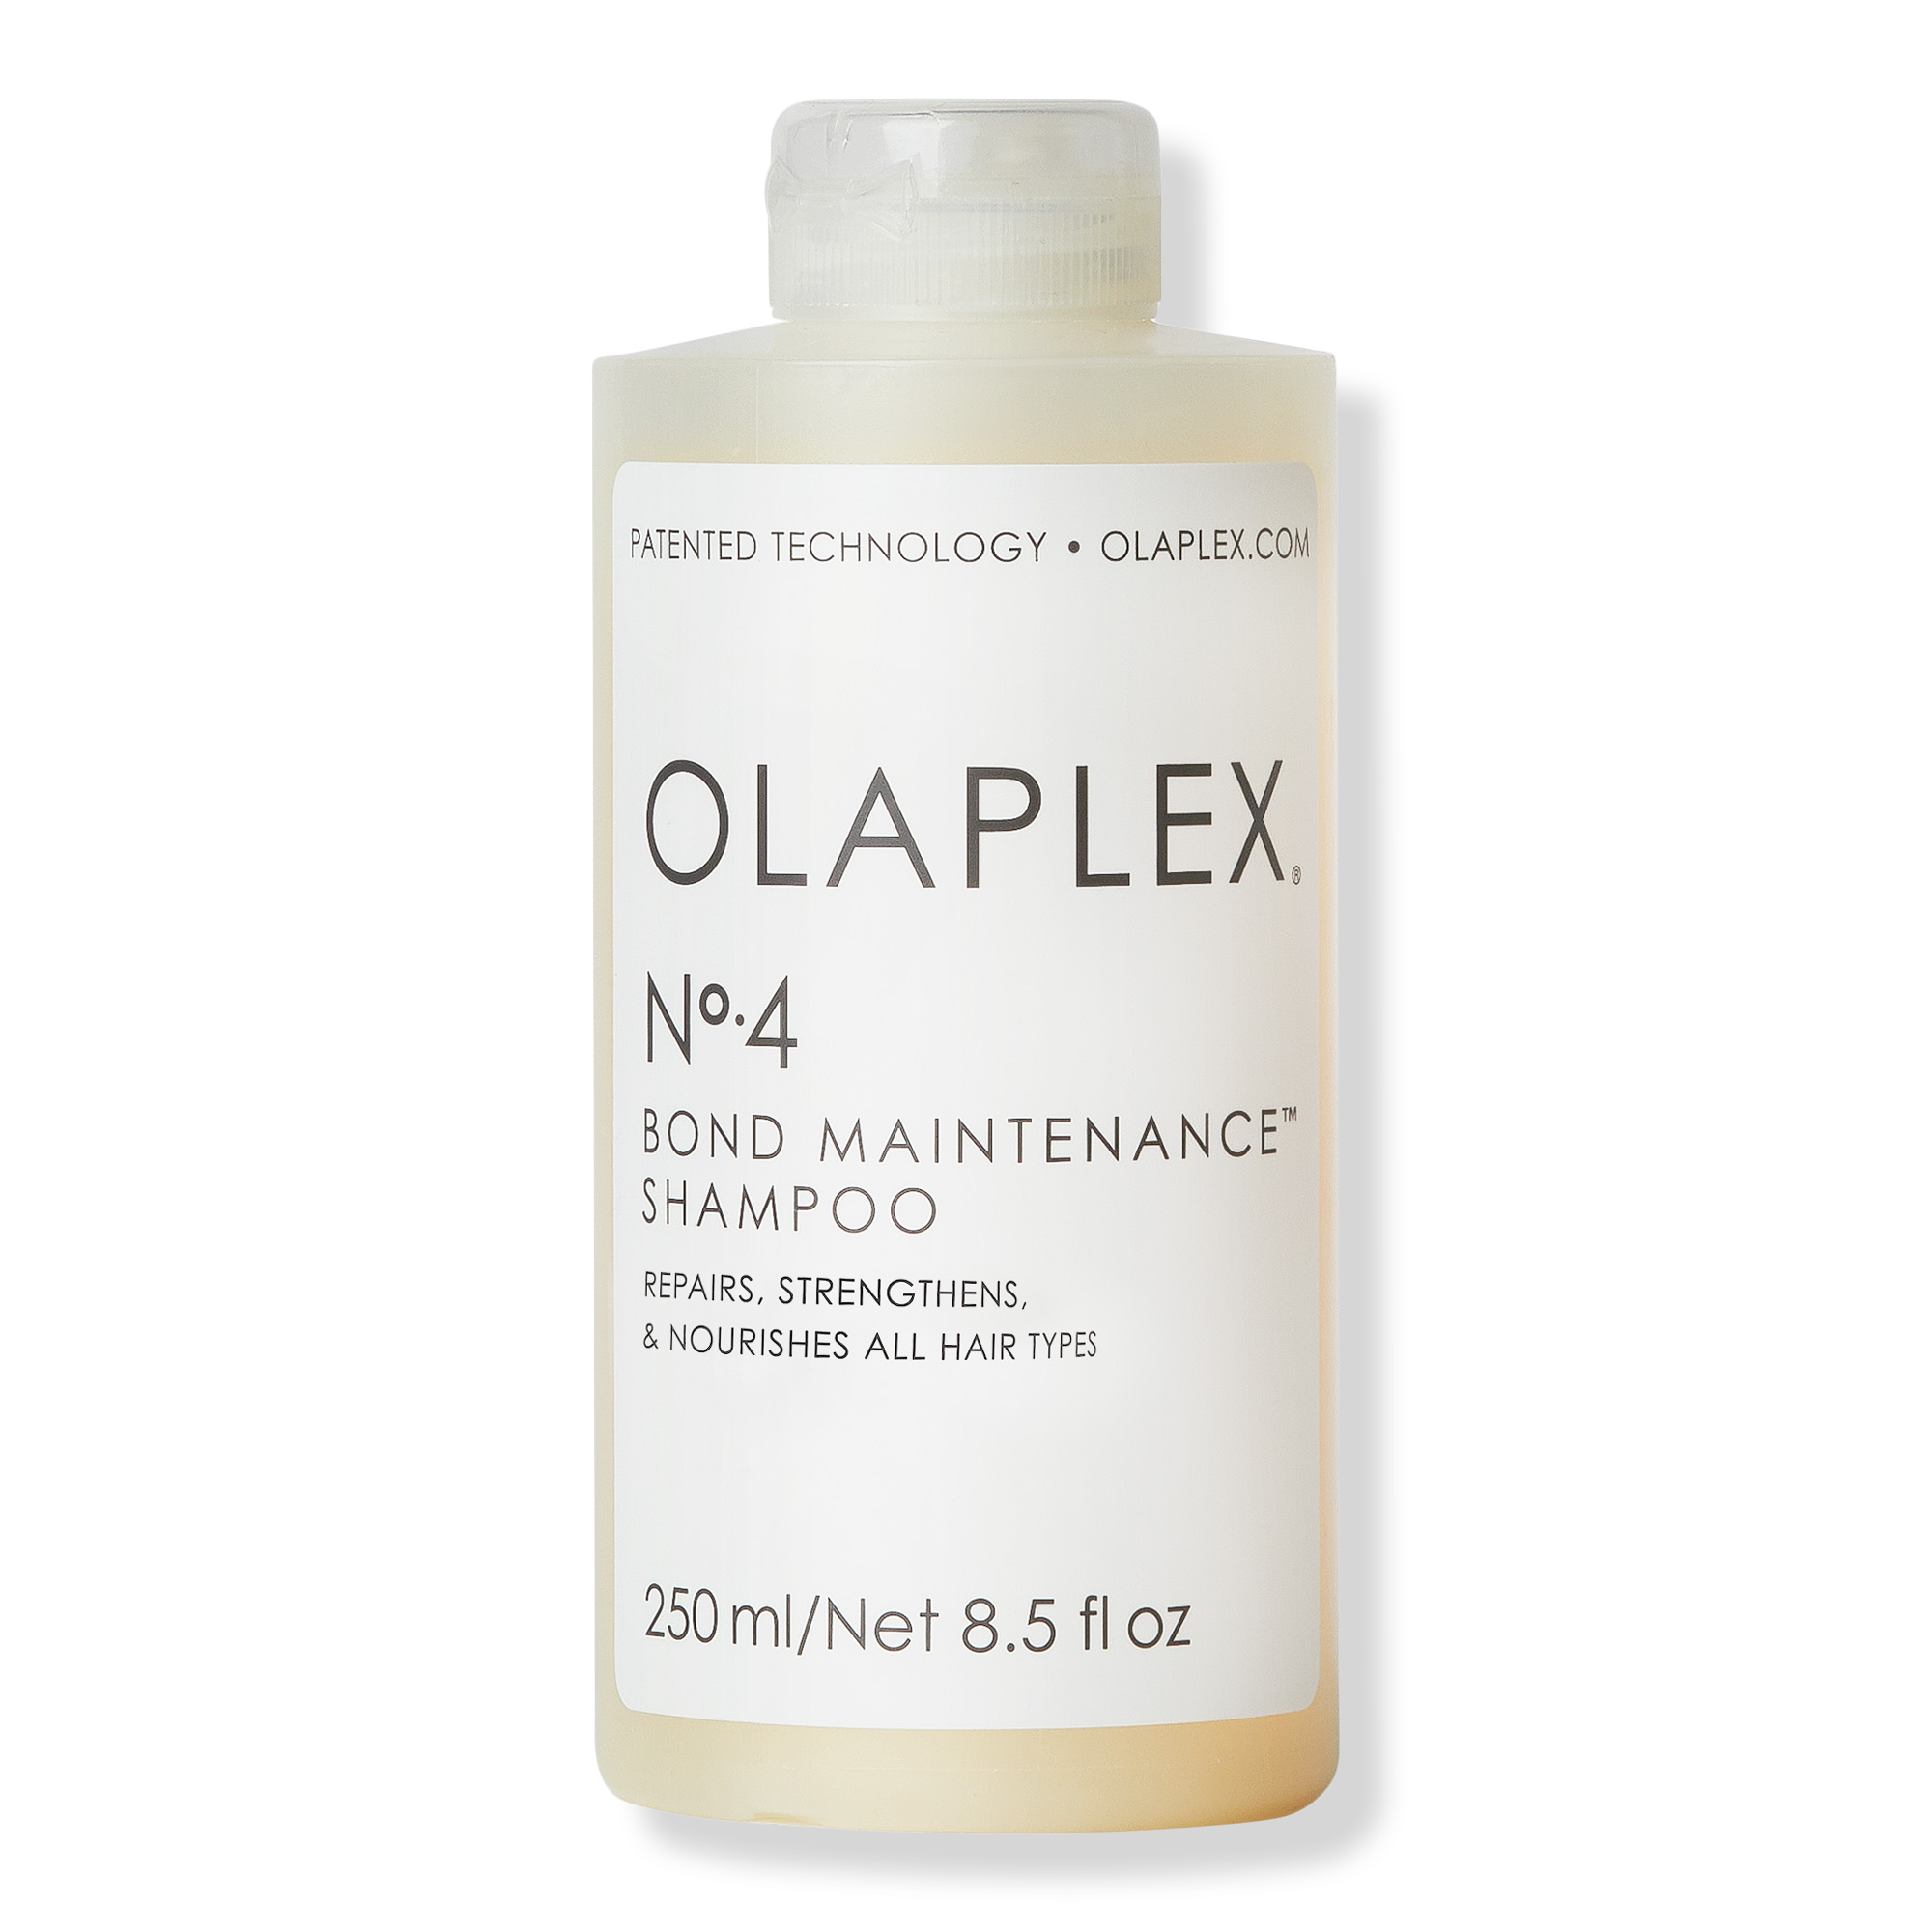 Olaplex No.3 Hair Perfector, No.4 Bond Maintenance Shampoo, & No.5 Bond Maintenance Conditioner Bundle / KIT